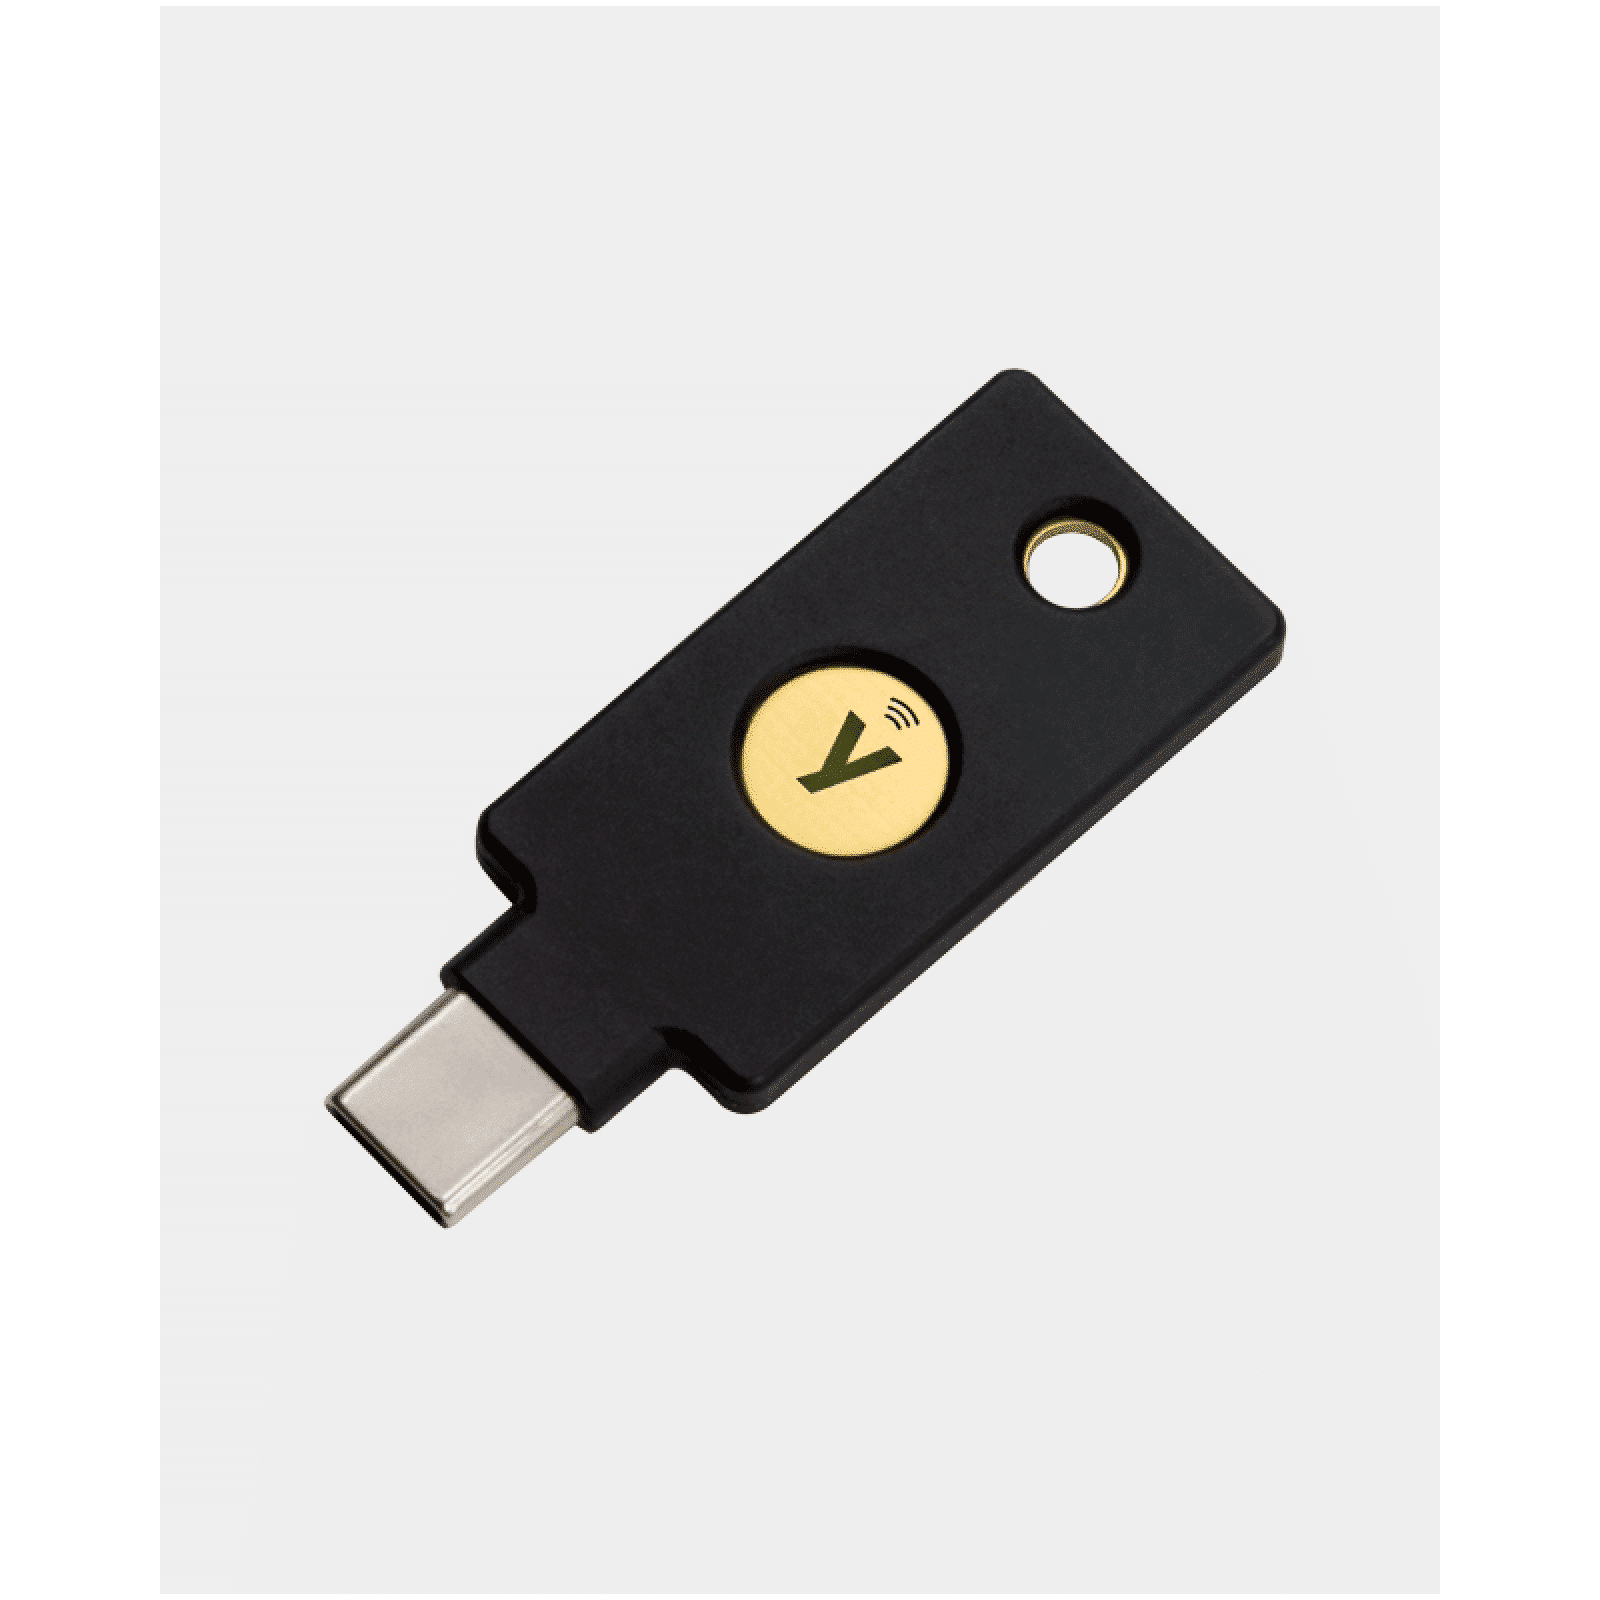 Апаратний ключ безпеки Yubico YubiKey 5C NFC (YubiKey_5C_NFC)